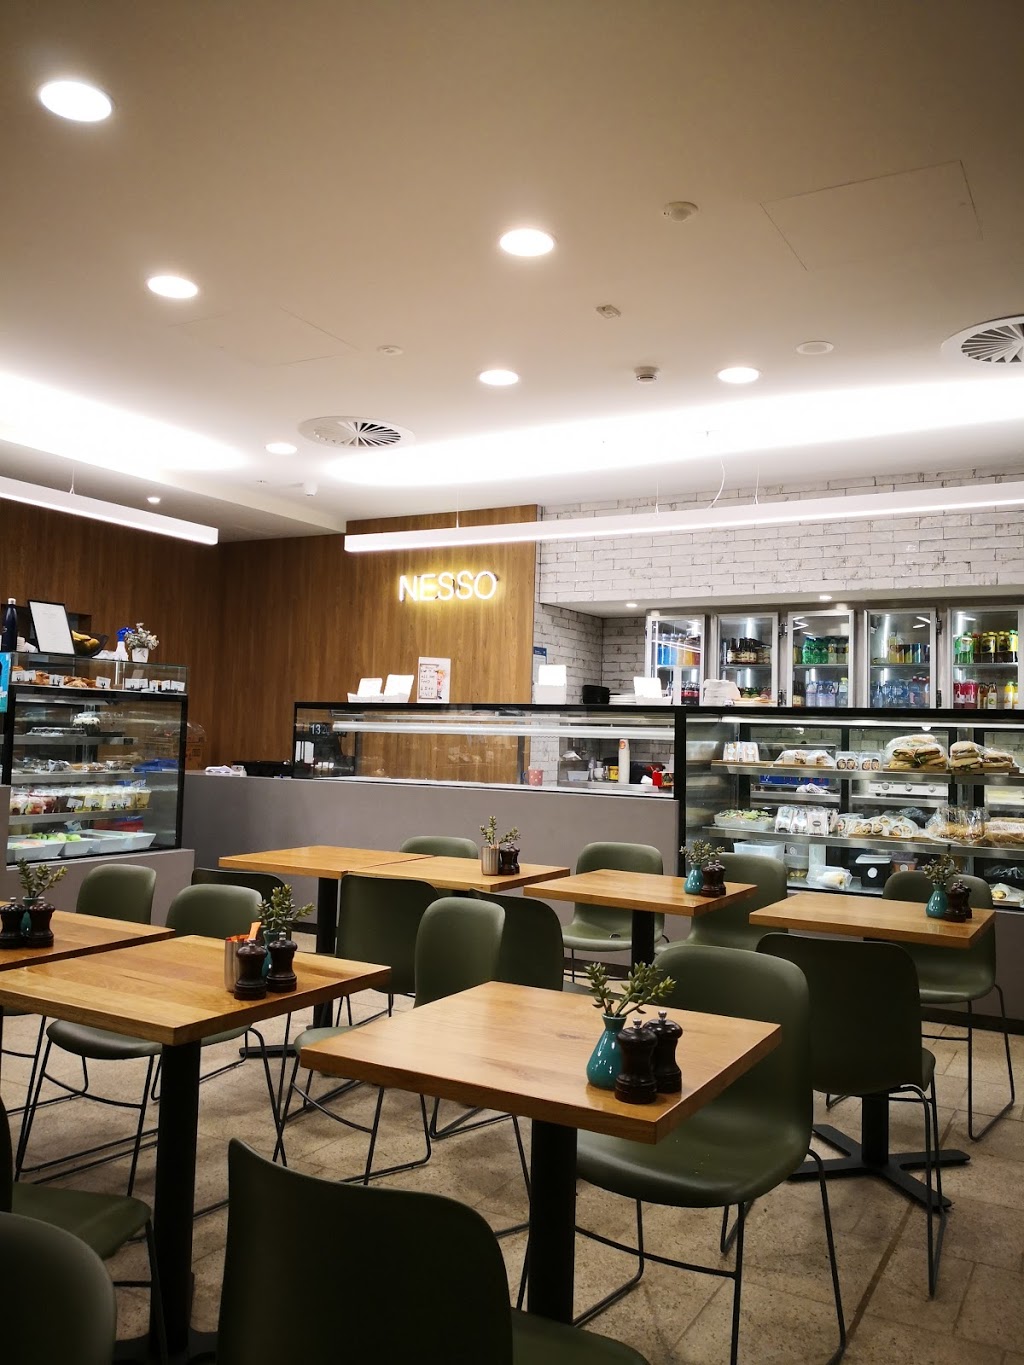 Nesso Cafe | Grd. Floor, Learning and Teaching Building, Monash University, 19 Ancora Imparo Way, Clayton VIC 3168, Australia | Phone: (03) 9558 8155